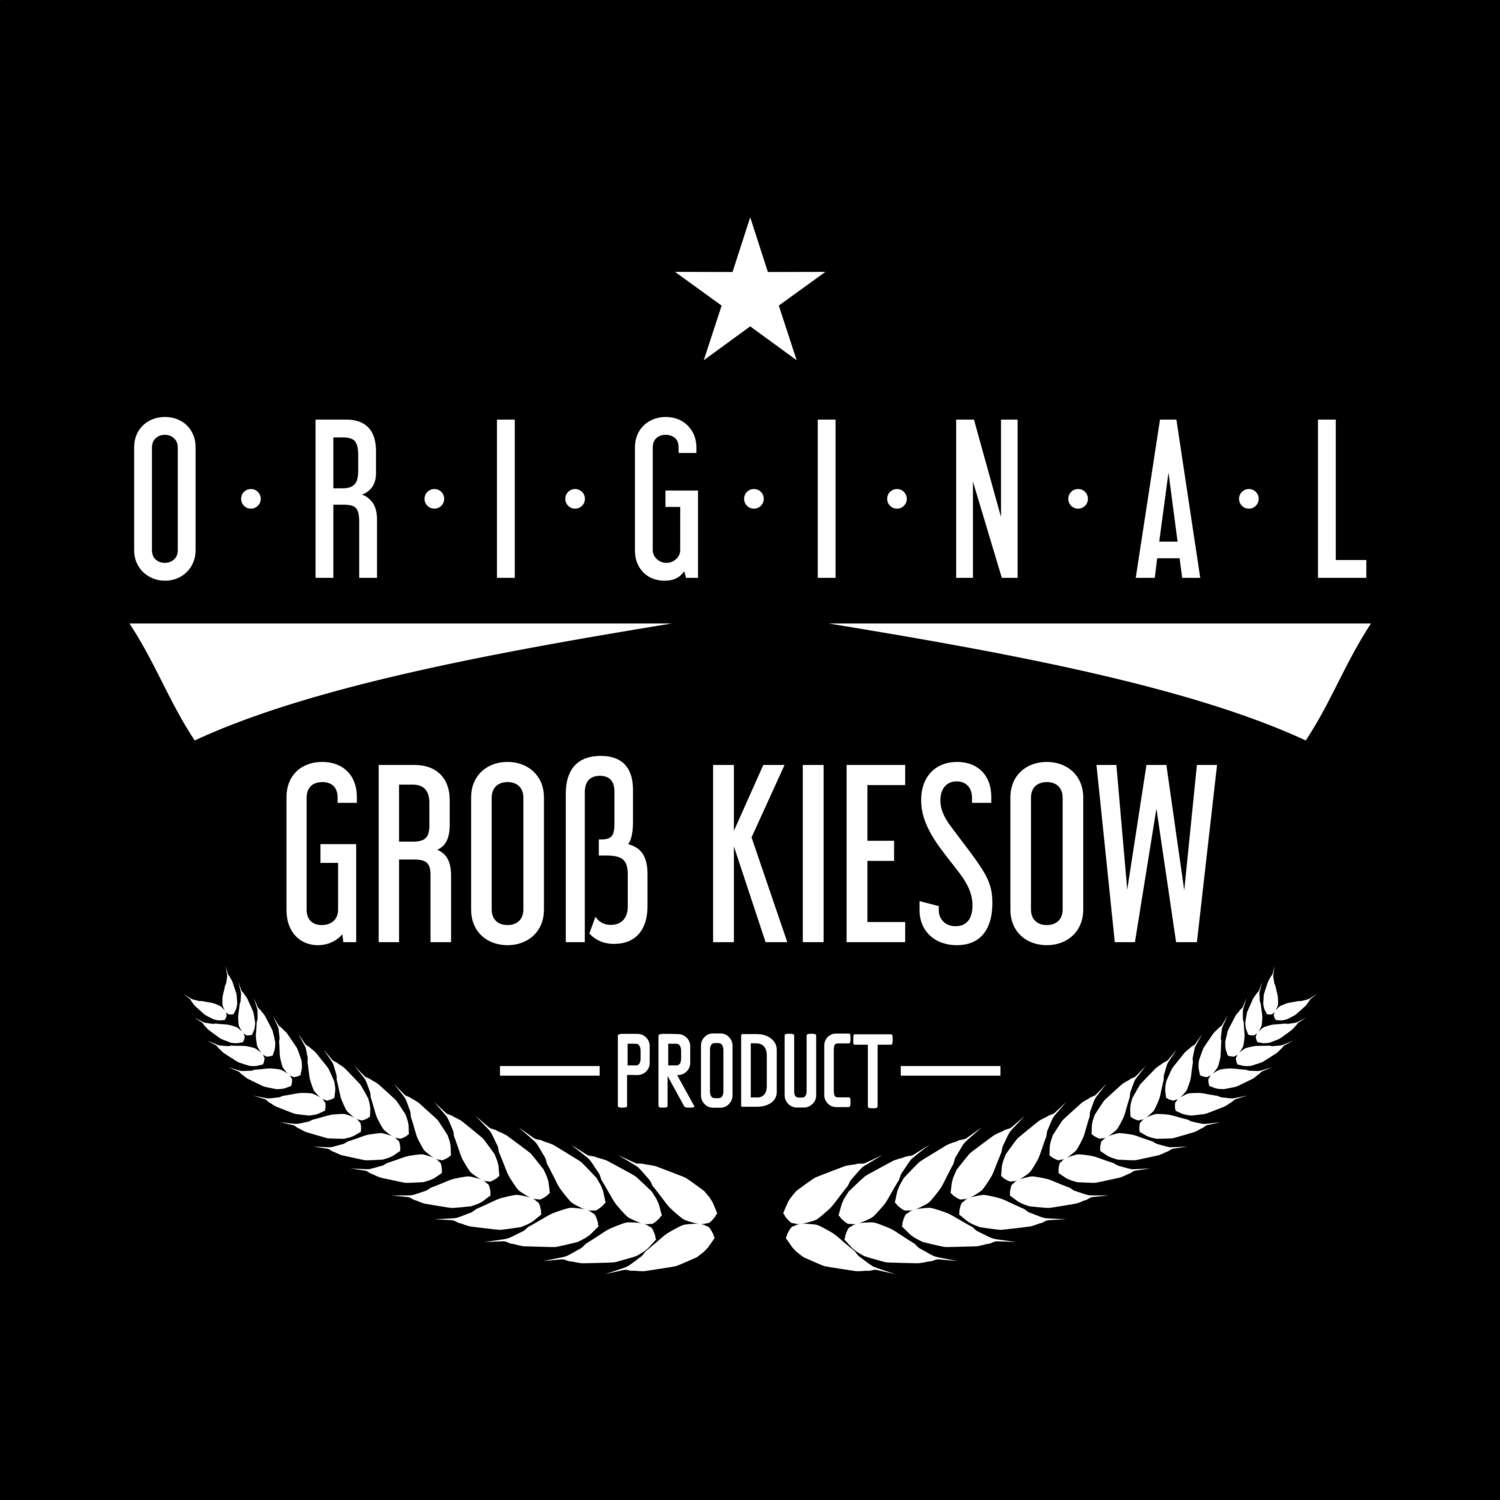 Groß Kiesow T-Shirt »Original Product«